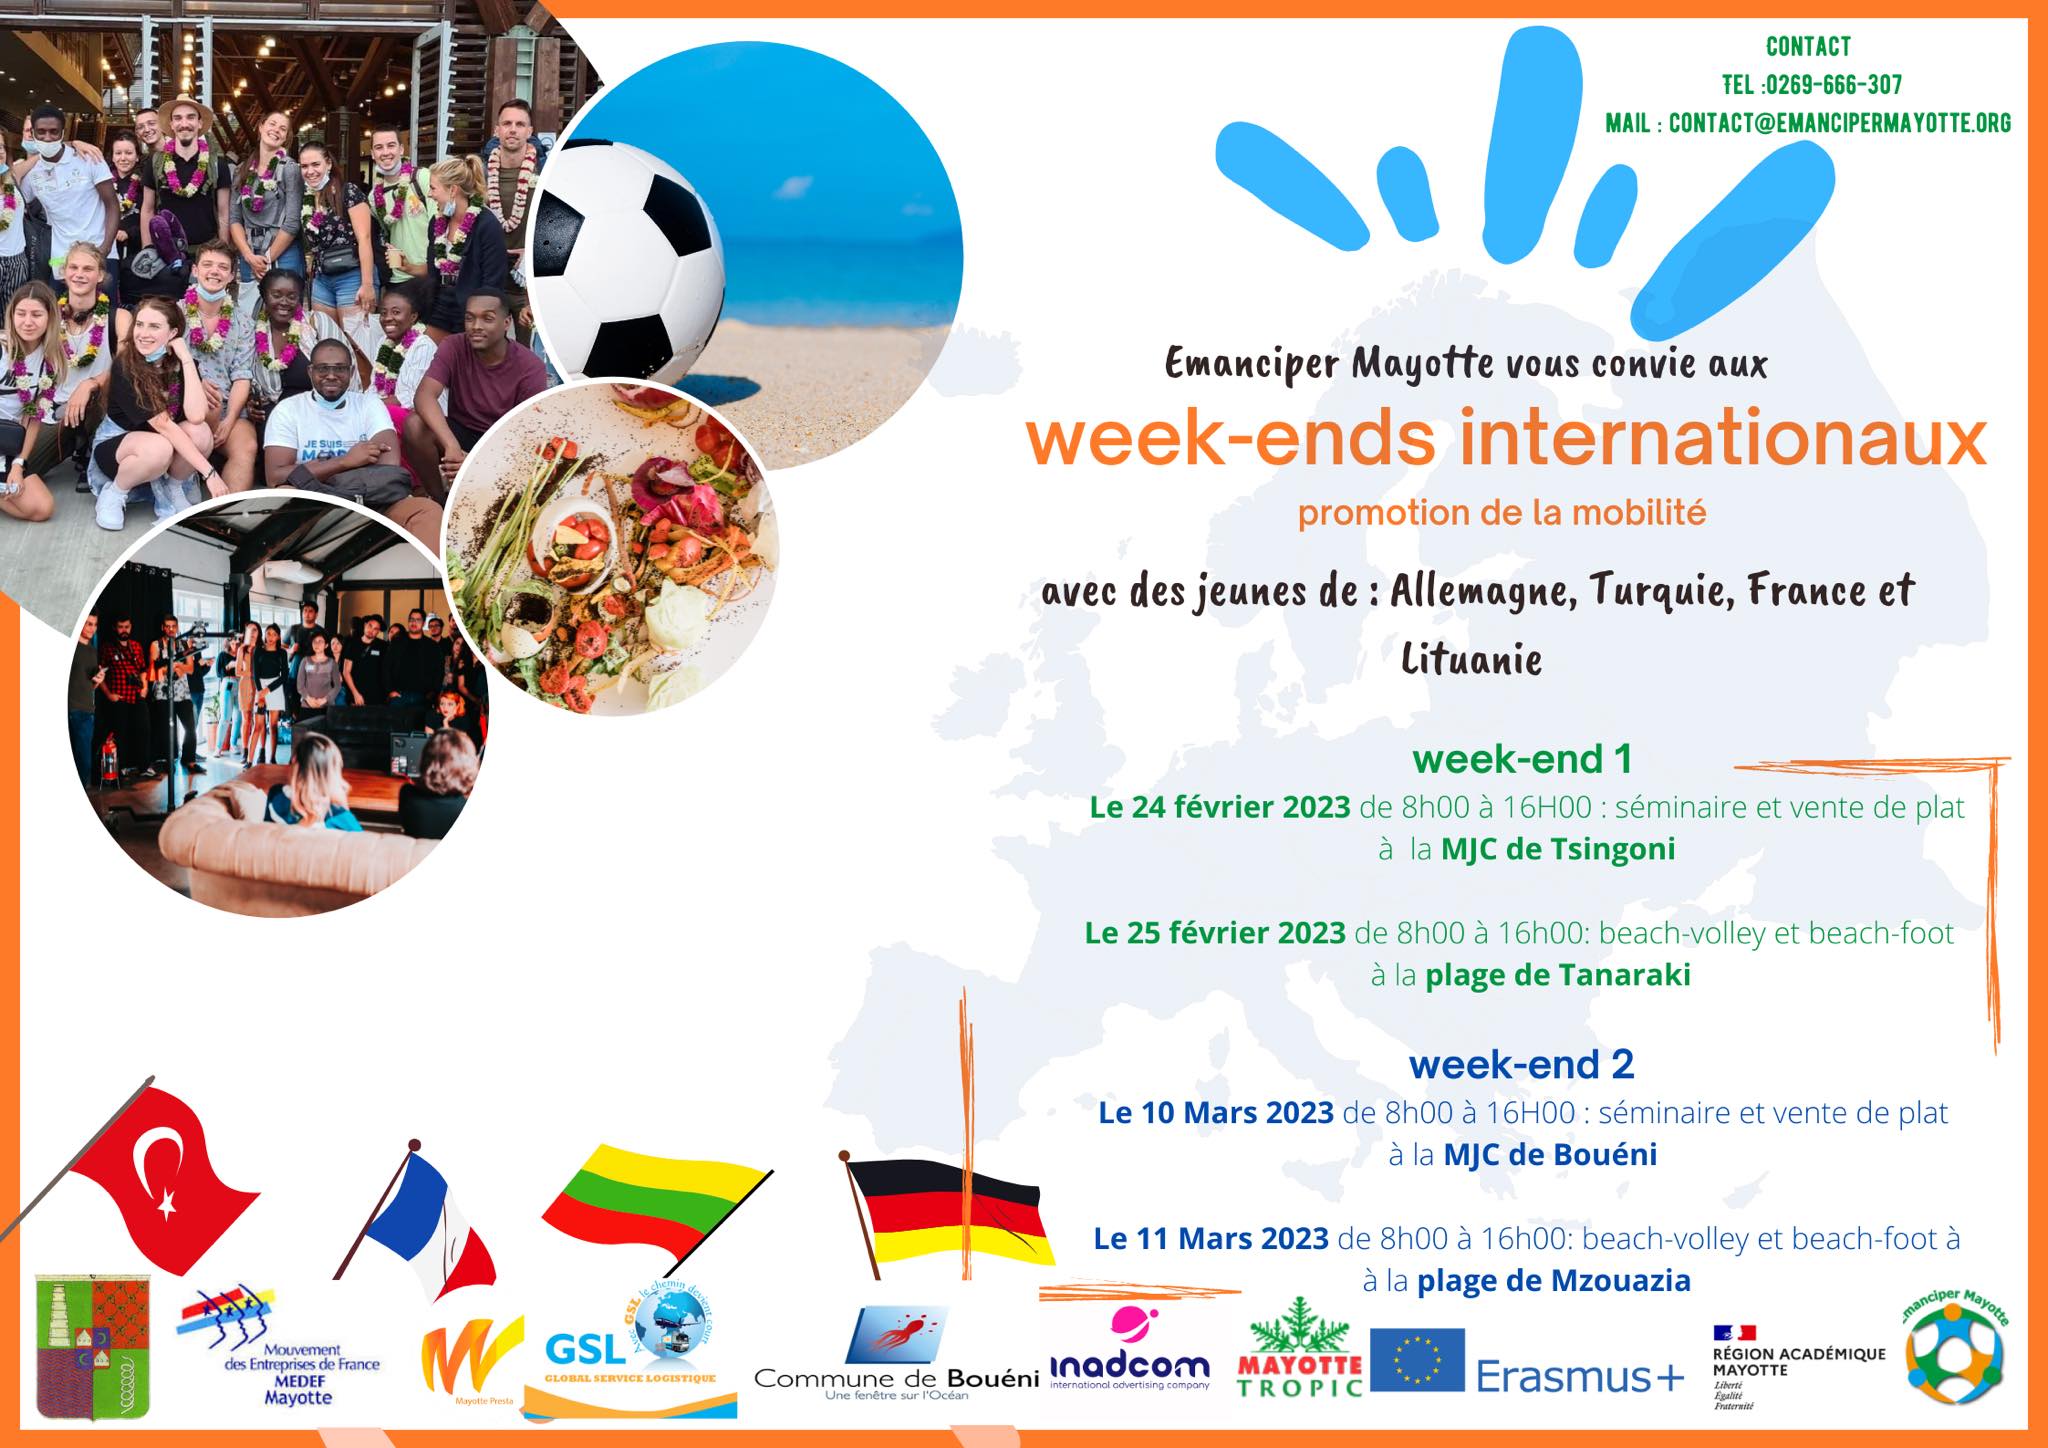 Week-ends internationals by Emanciper Mayotte